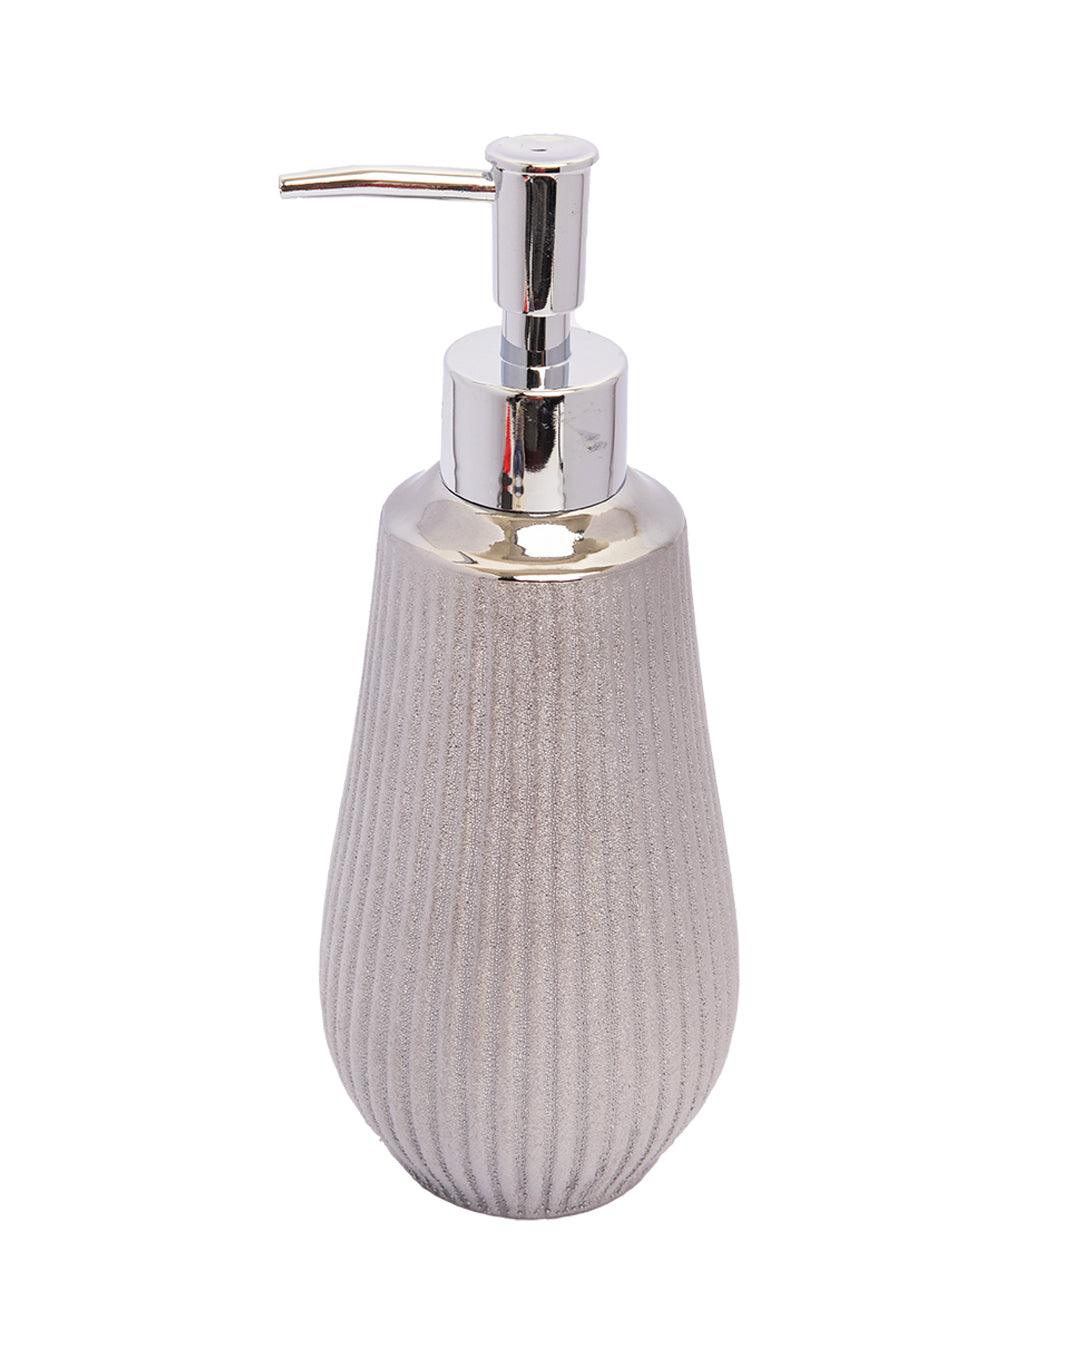 Soap Dispenser, Silver & Brown, Ceramic - MARKET 99